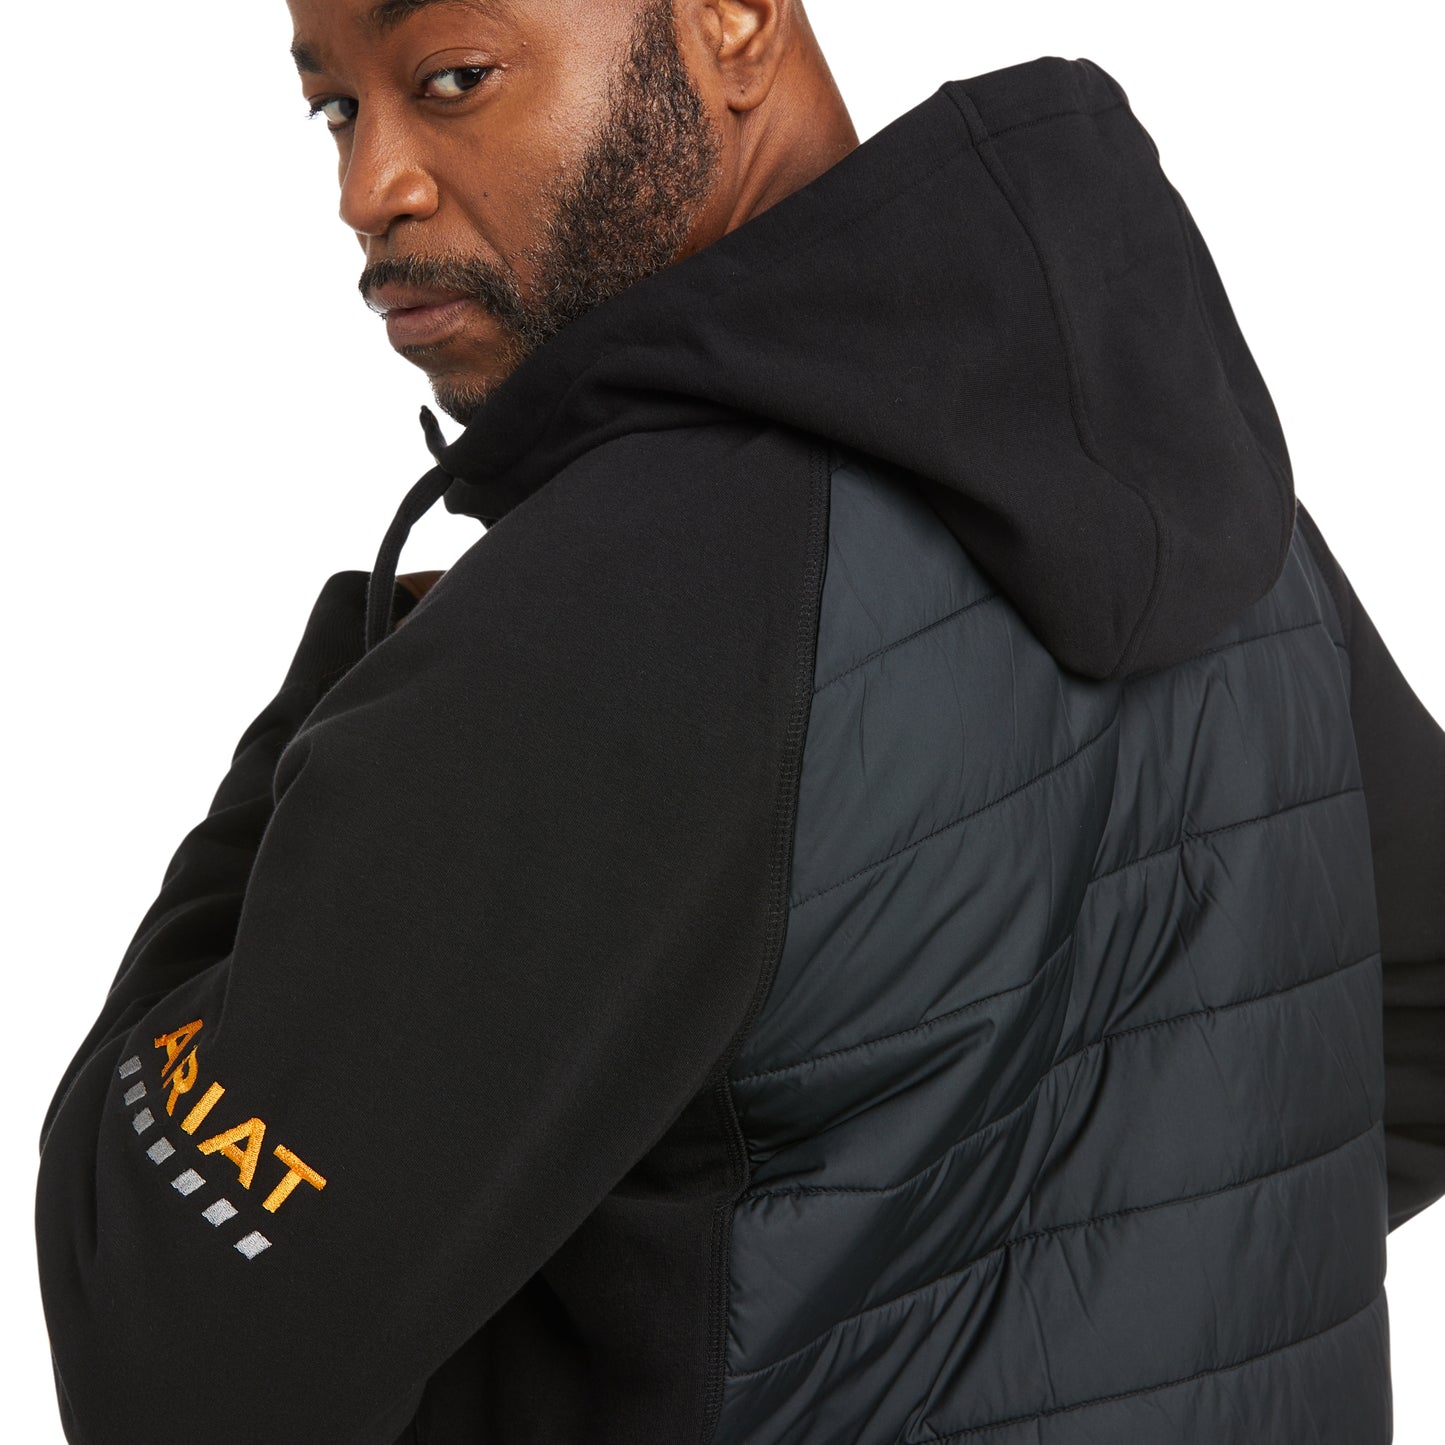 Ariat® Men's Rebar Thermic Insulated Full Zip Black Hoodie 10037484